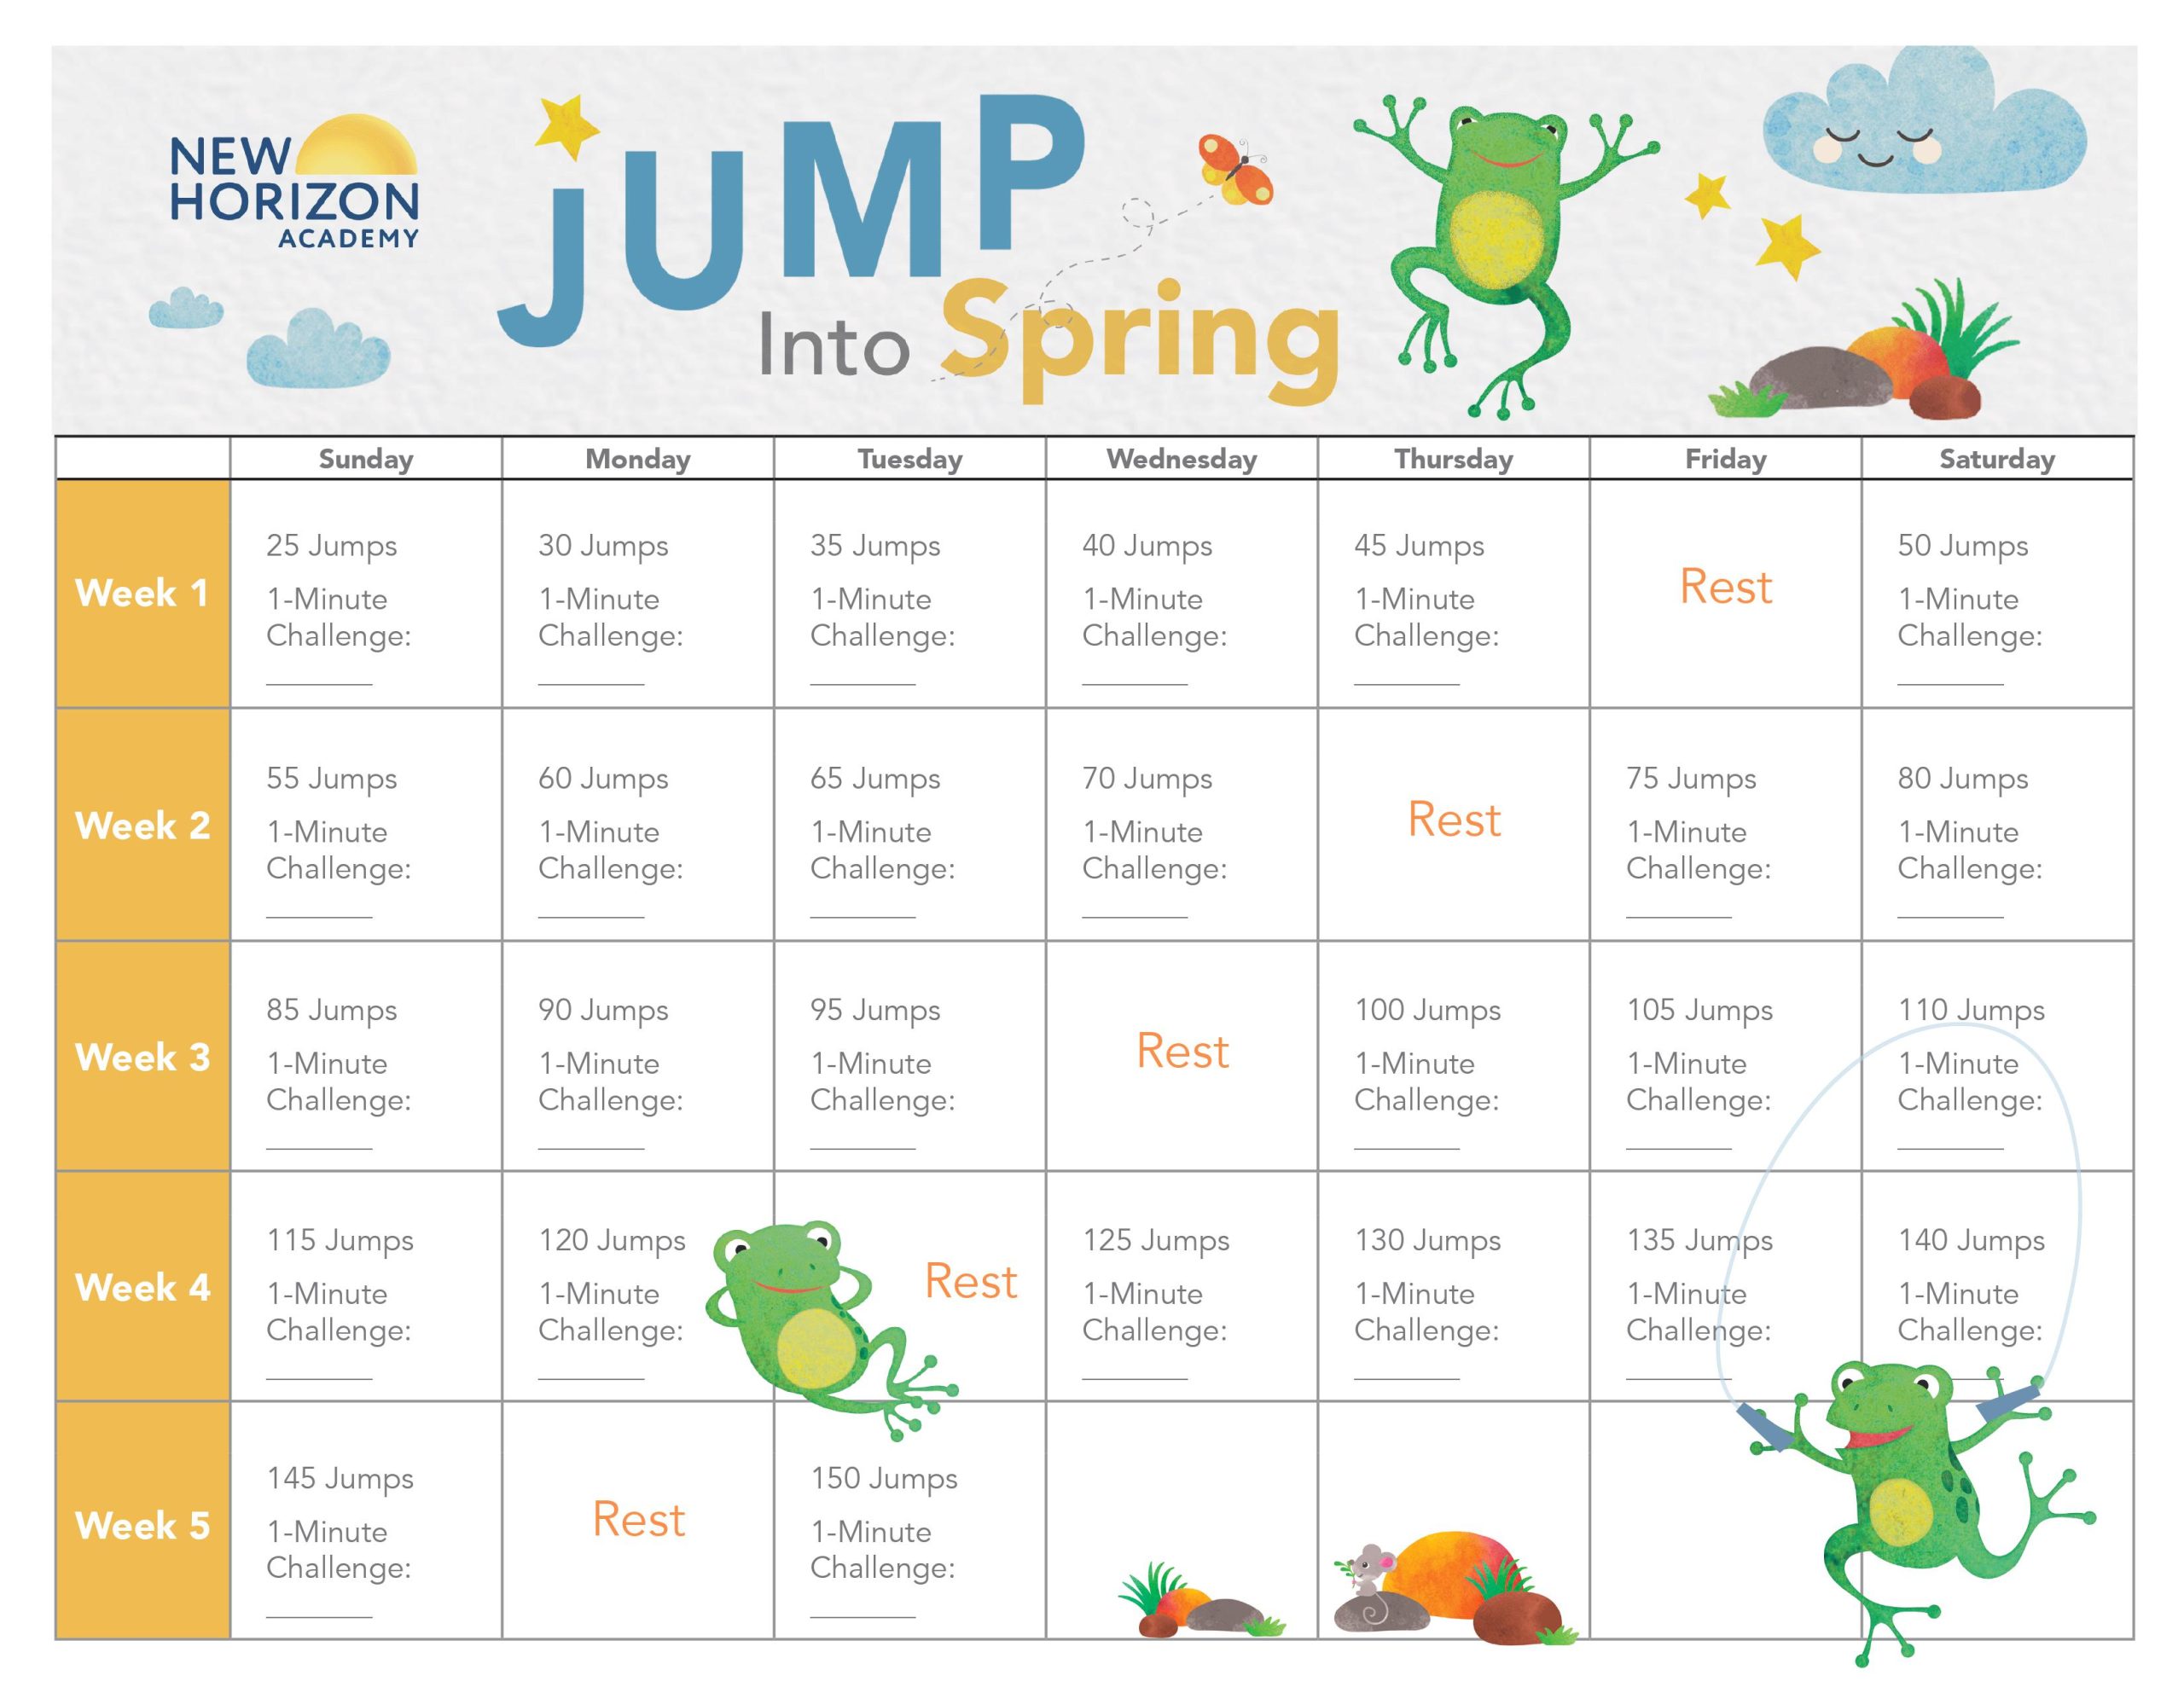 New Horizon Academy's Jump Into Spring activity calendar